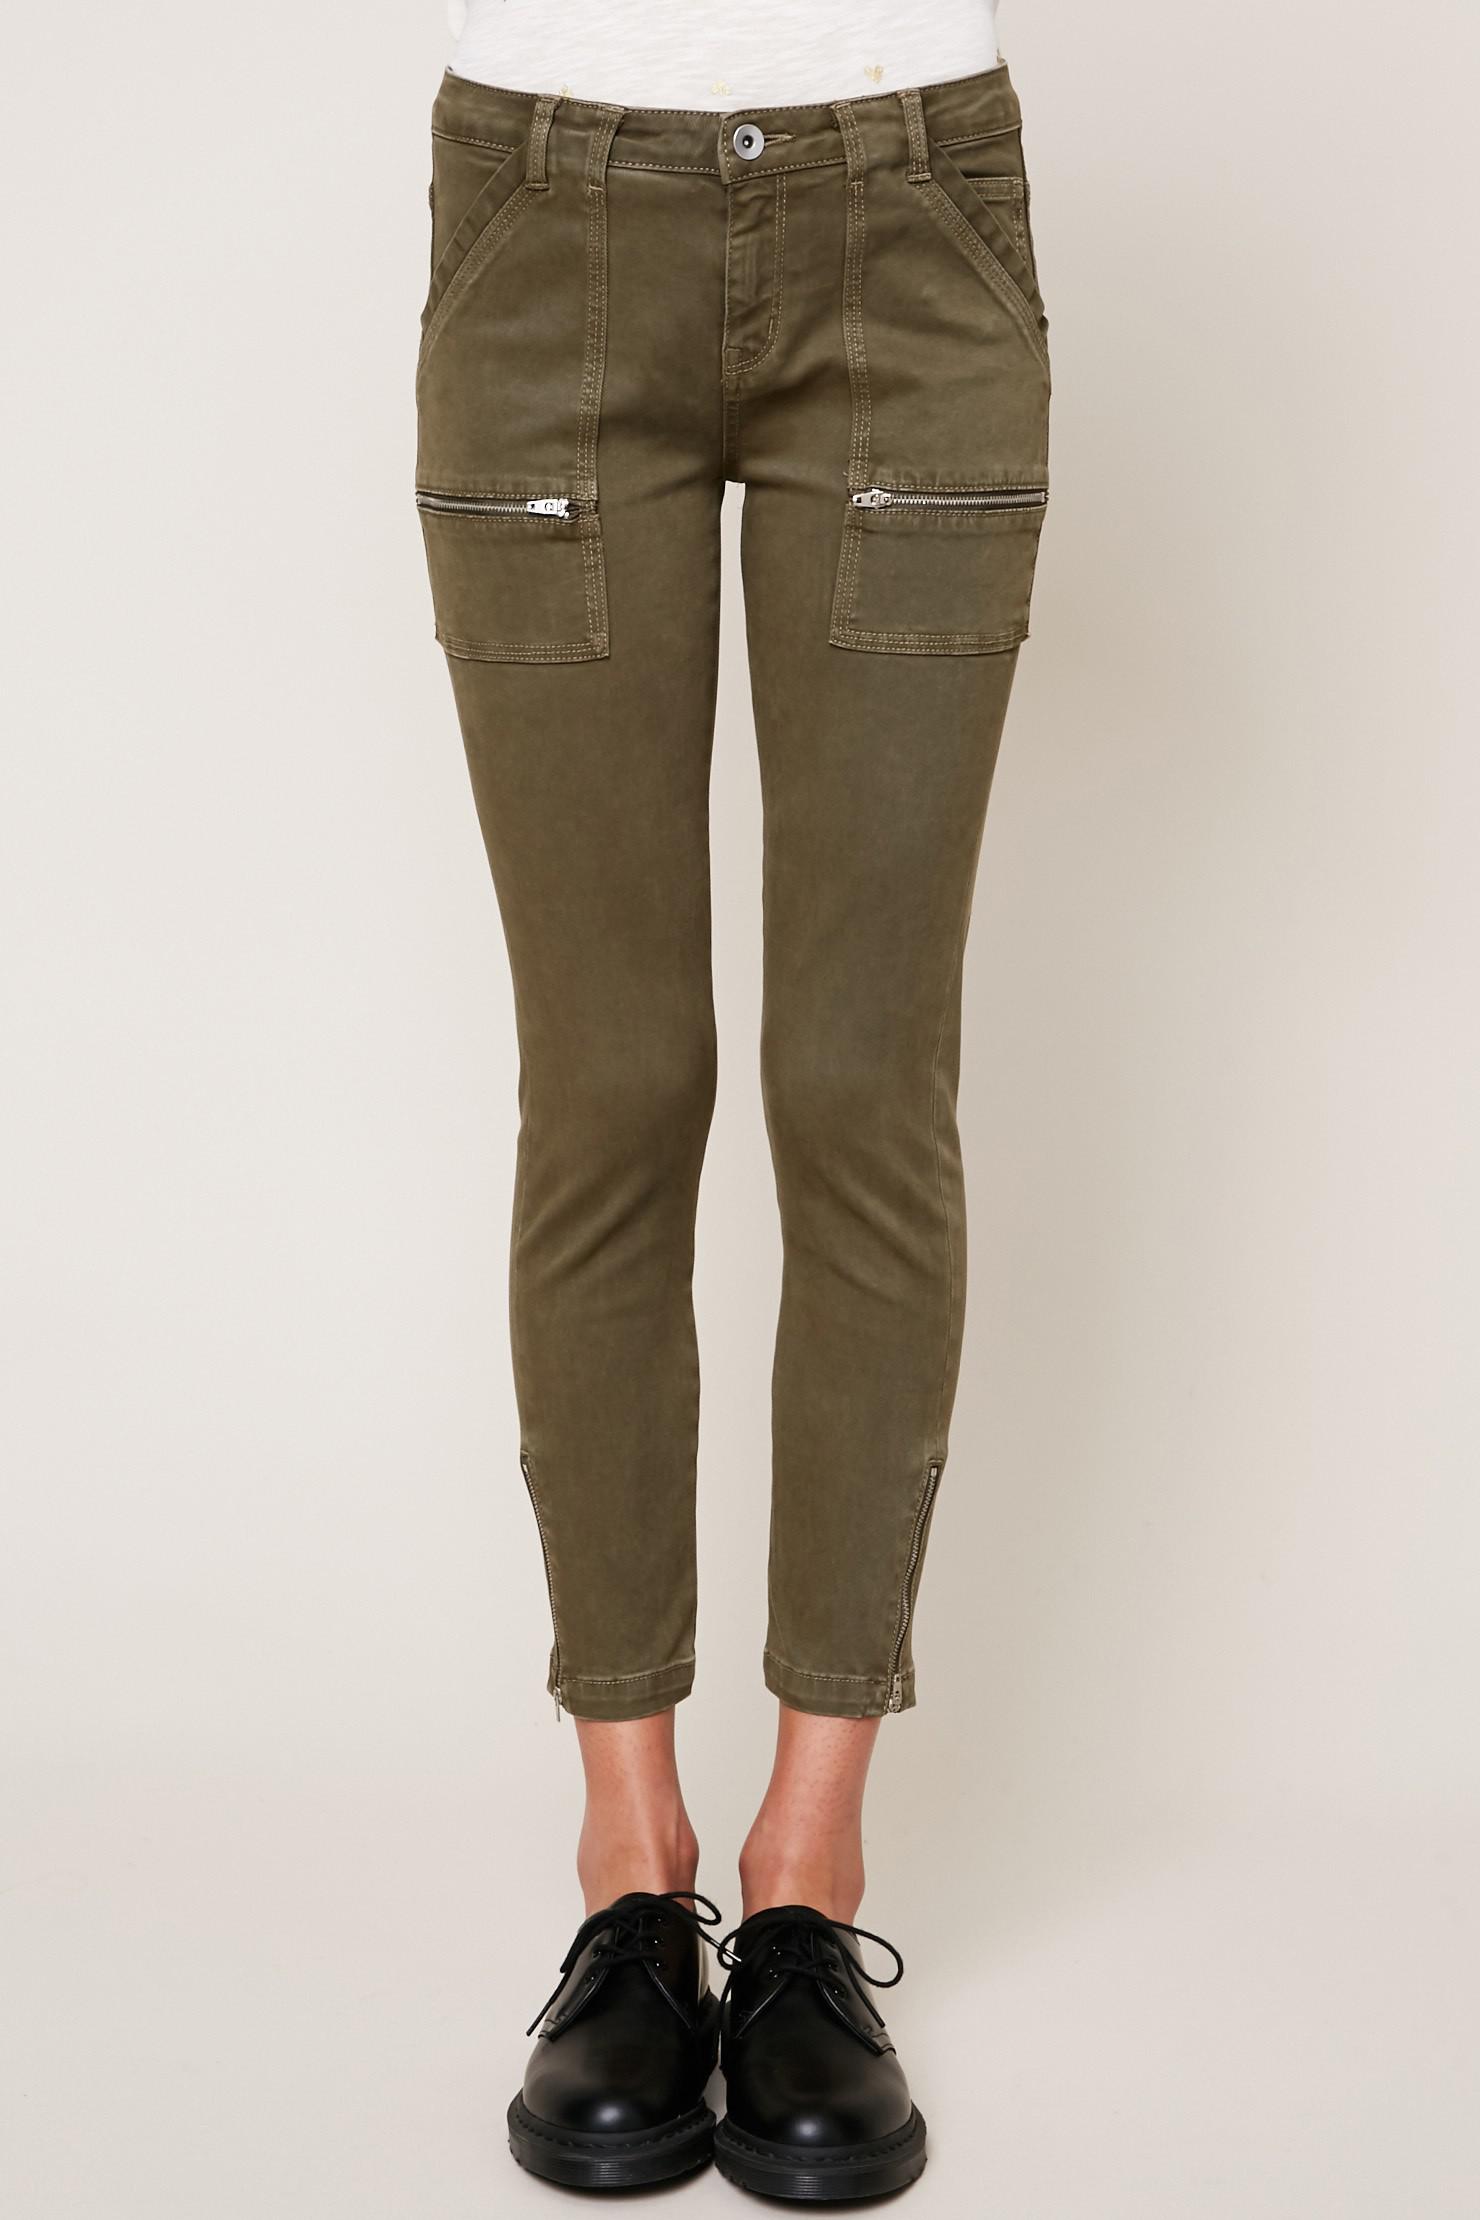 Lyst - Ikks Slim-fit Trousers in Green